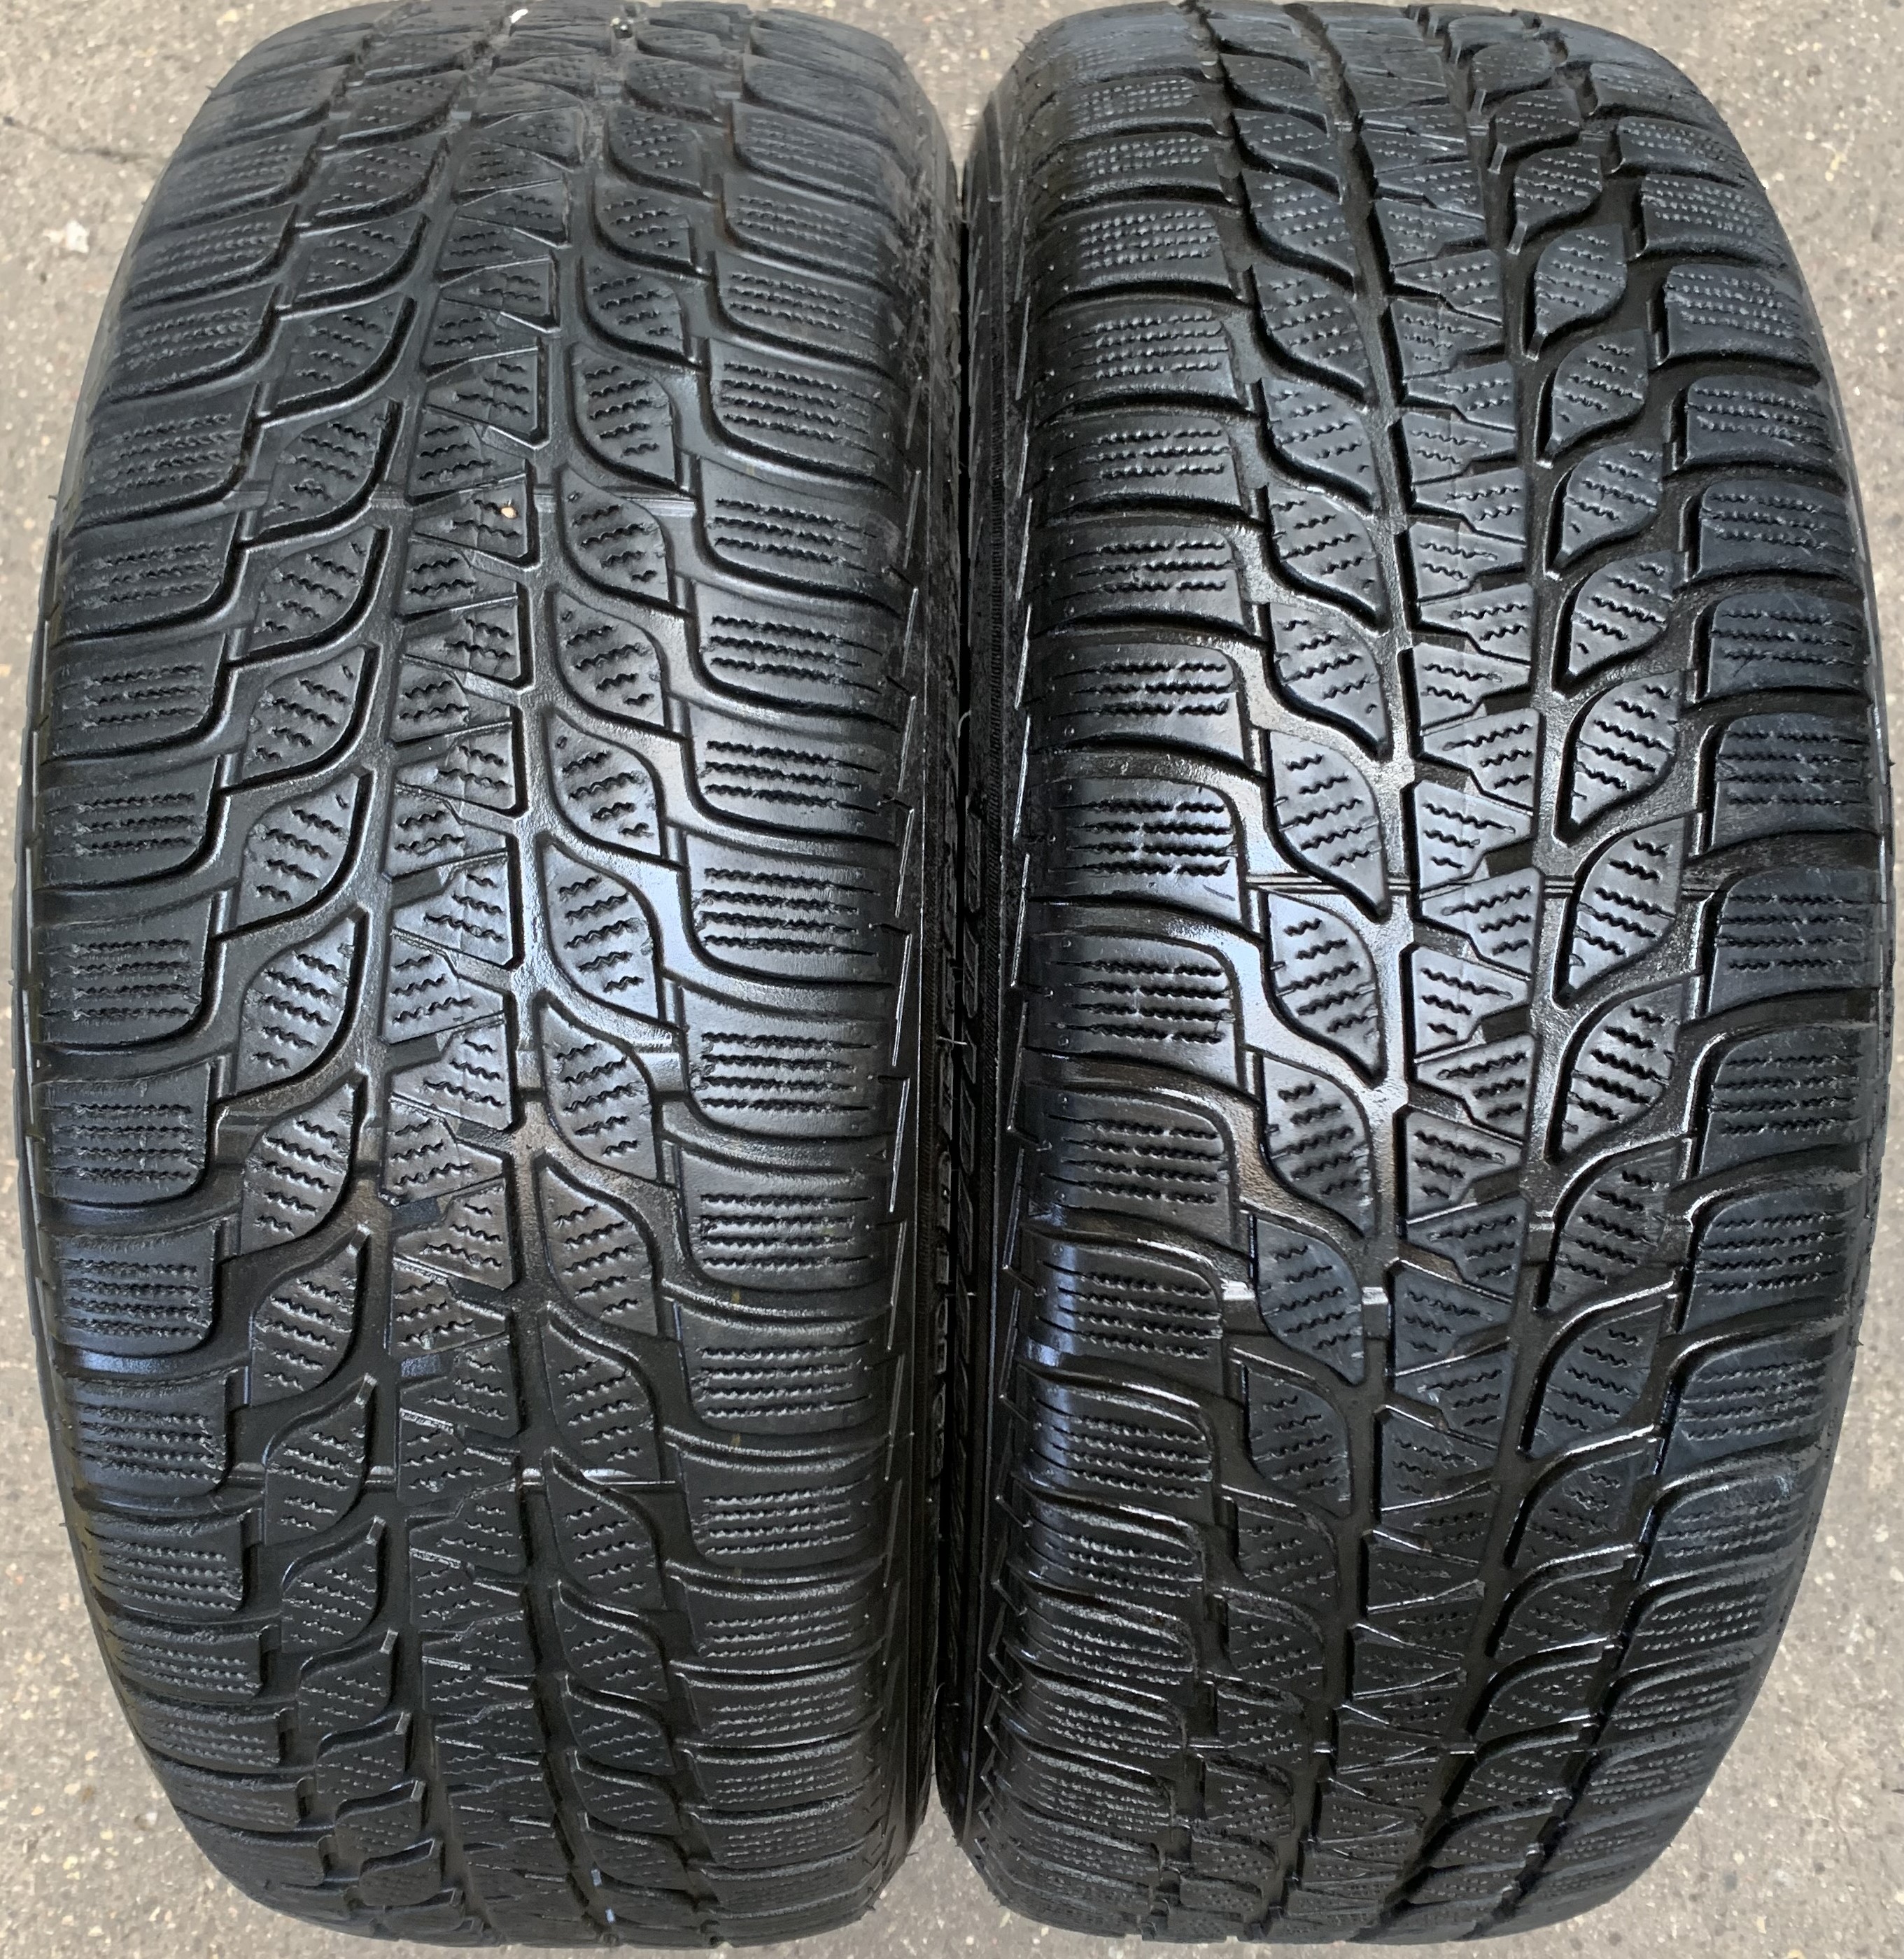 RA5687 Bridgestone Winter Blizzak Rsc RFT 195/55 2 87H R16 M+S LM-25 Tires eBay |